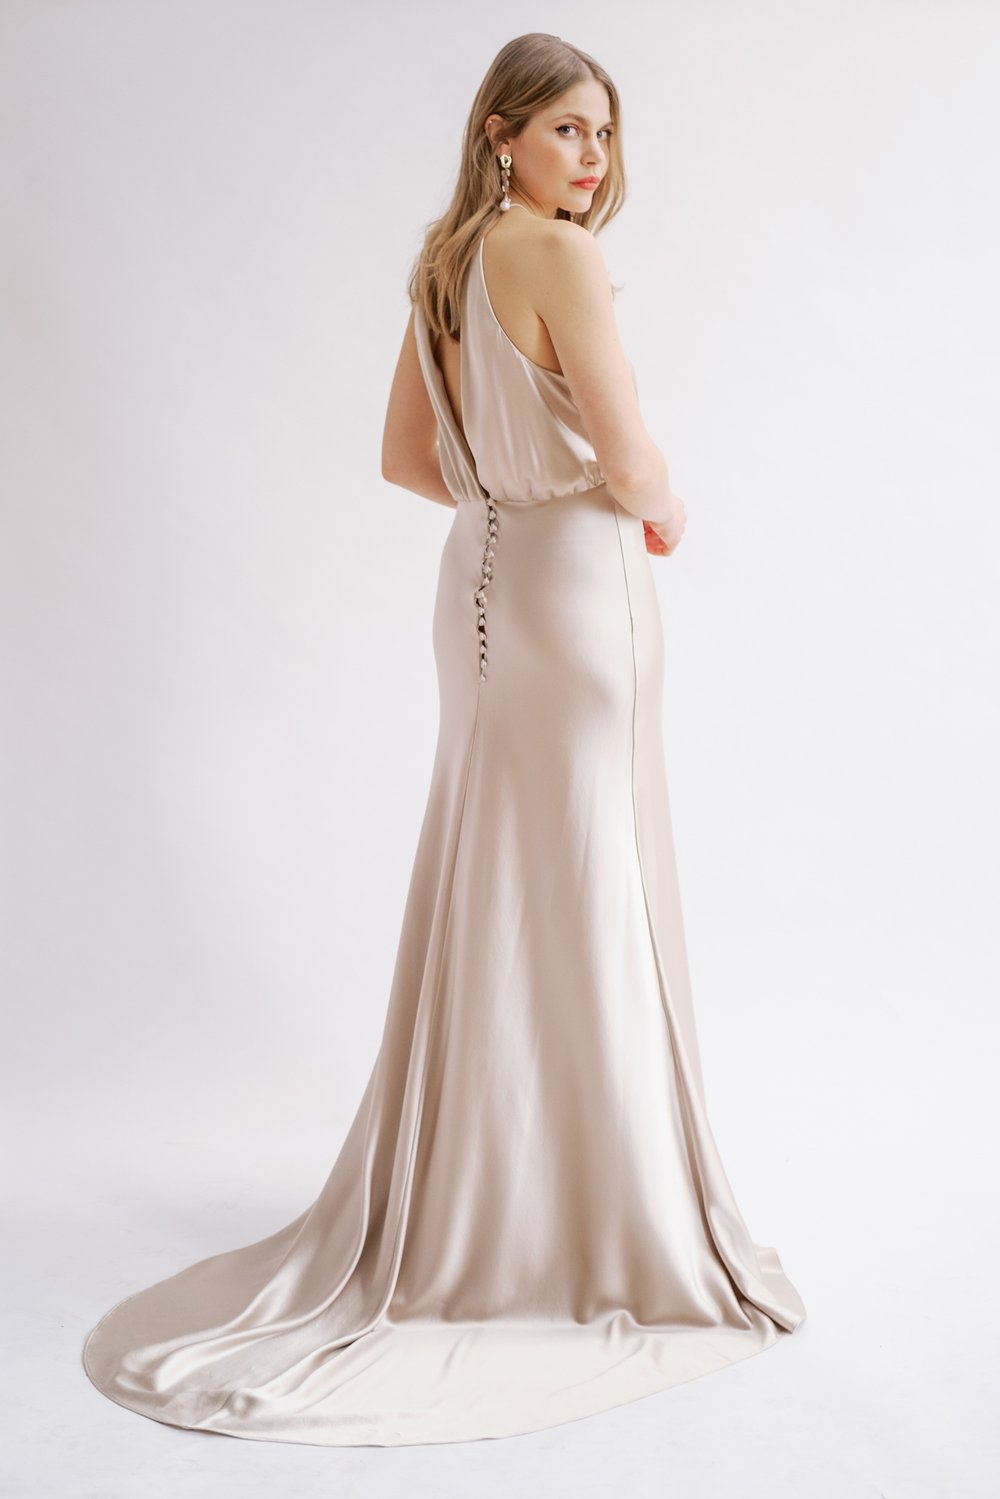 Amaryllis bias cut silk wedding gown Kate Beaumont Sheffield 11.jpg